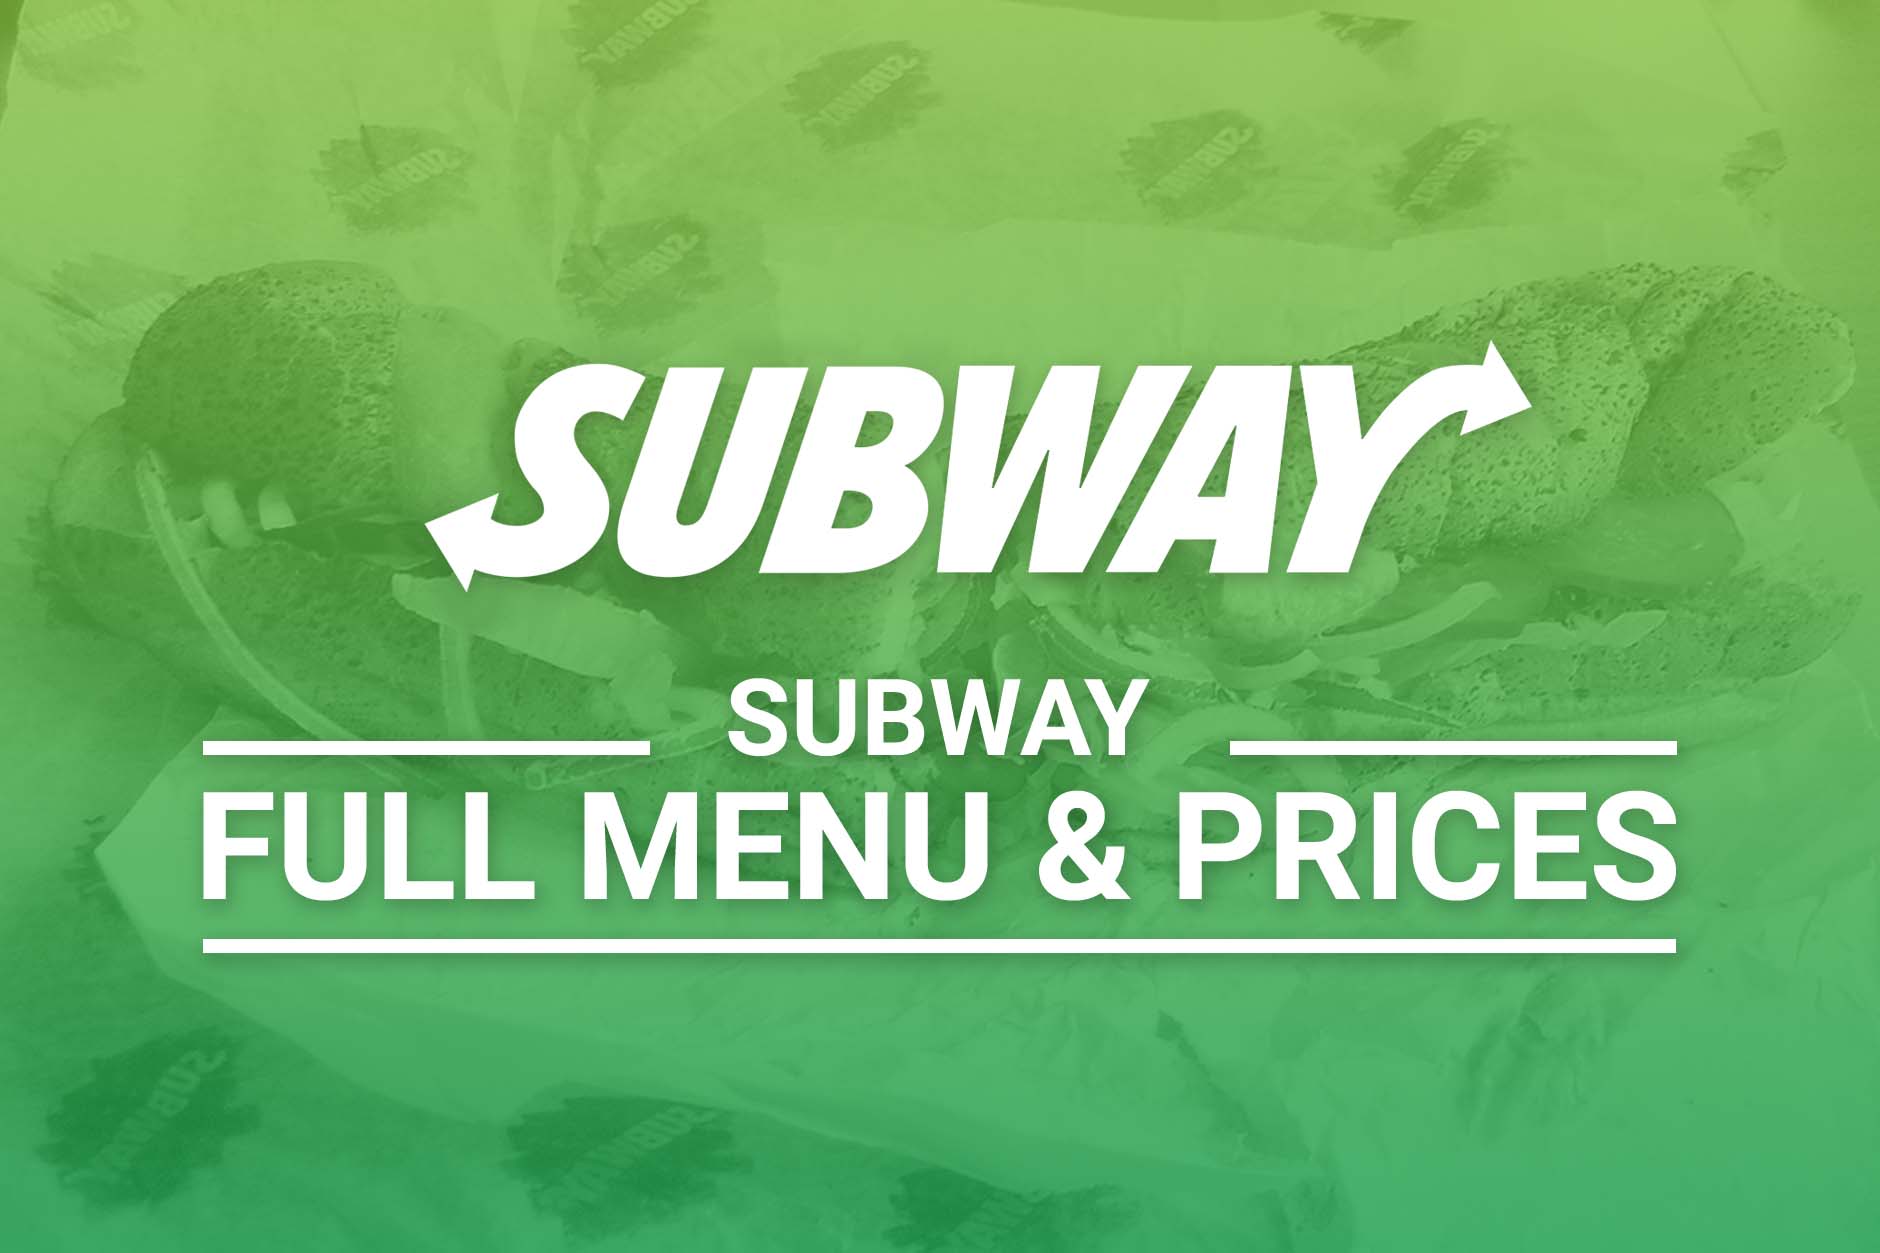 subway full menu prices